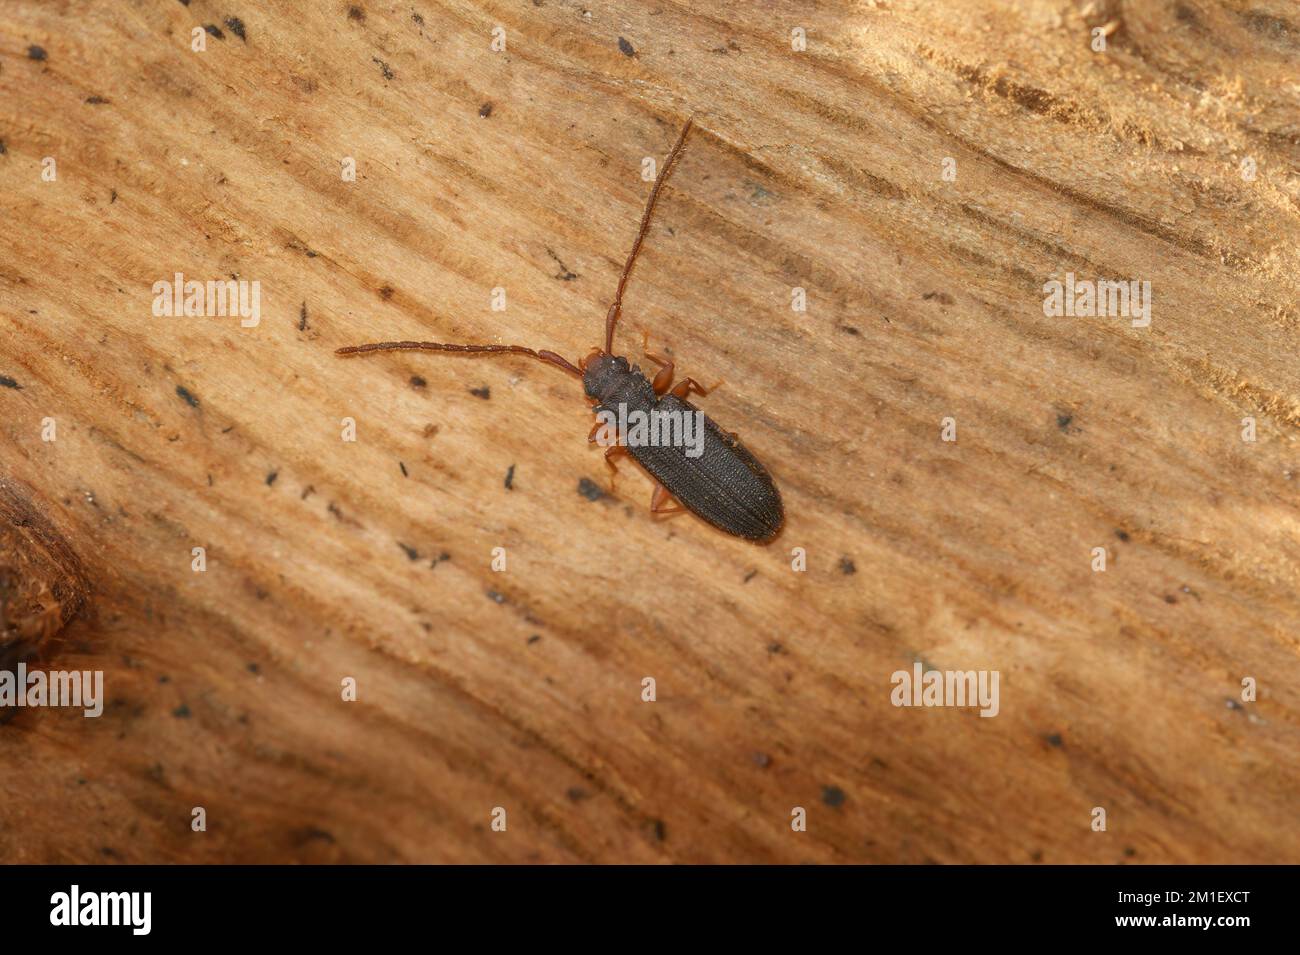 Natural closeup on a silvanid flat bark beetles, Uleiota planata, on a piece of wood Stock Photo